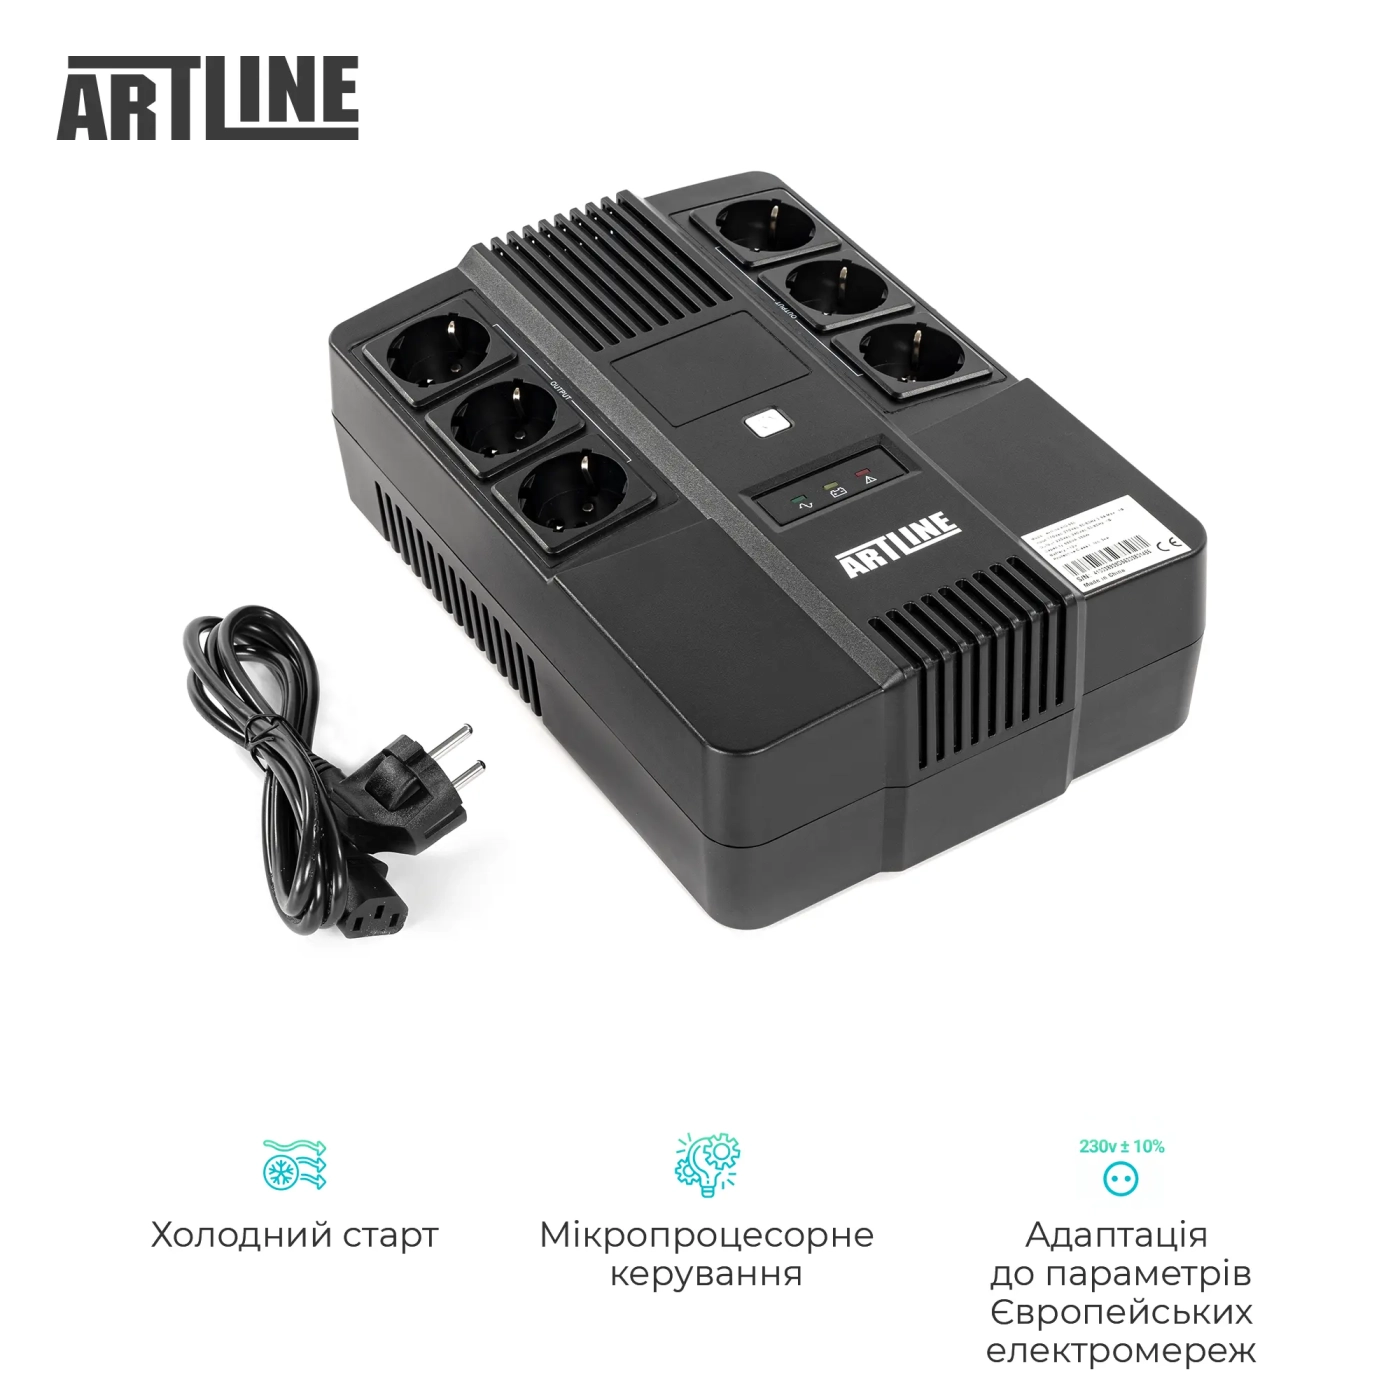 Купить ИБП (UPS) линейно-интерактивный Artline AIO 650, 650VA/360W, LED, 6 x Schuko - фото 4